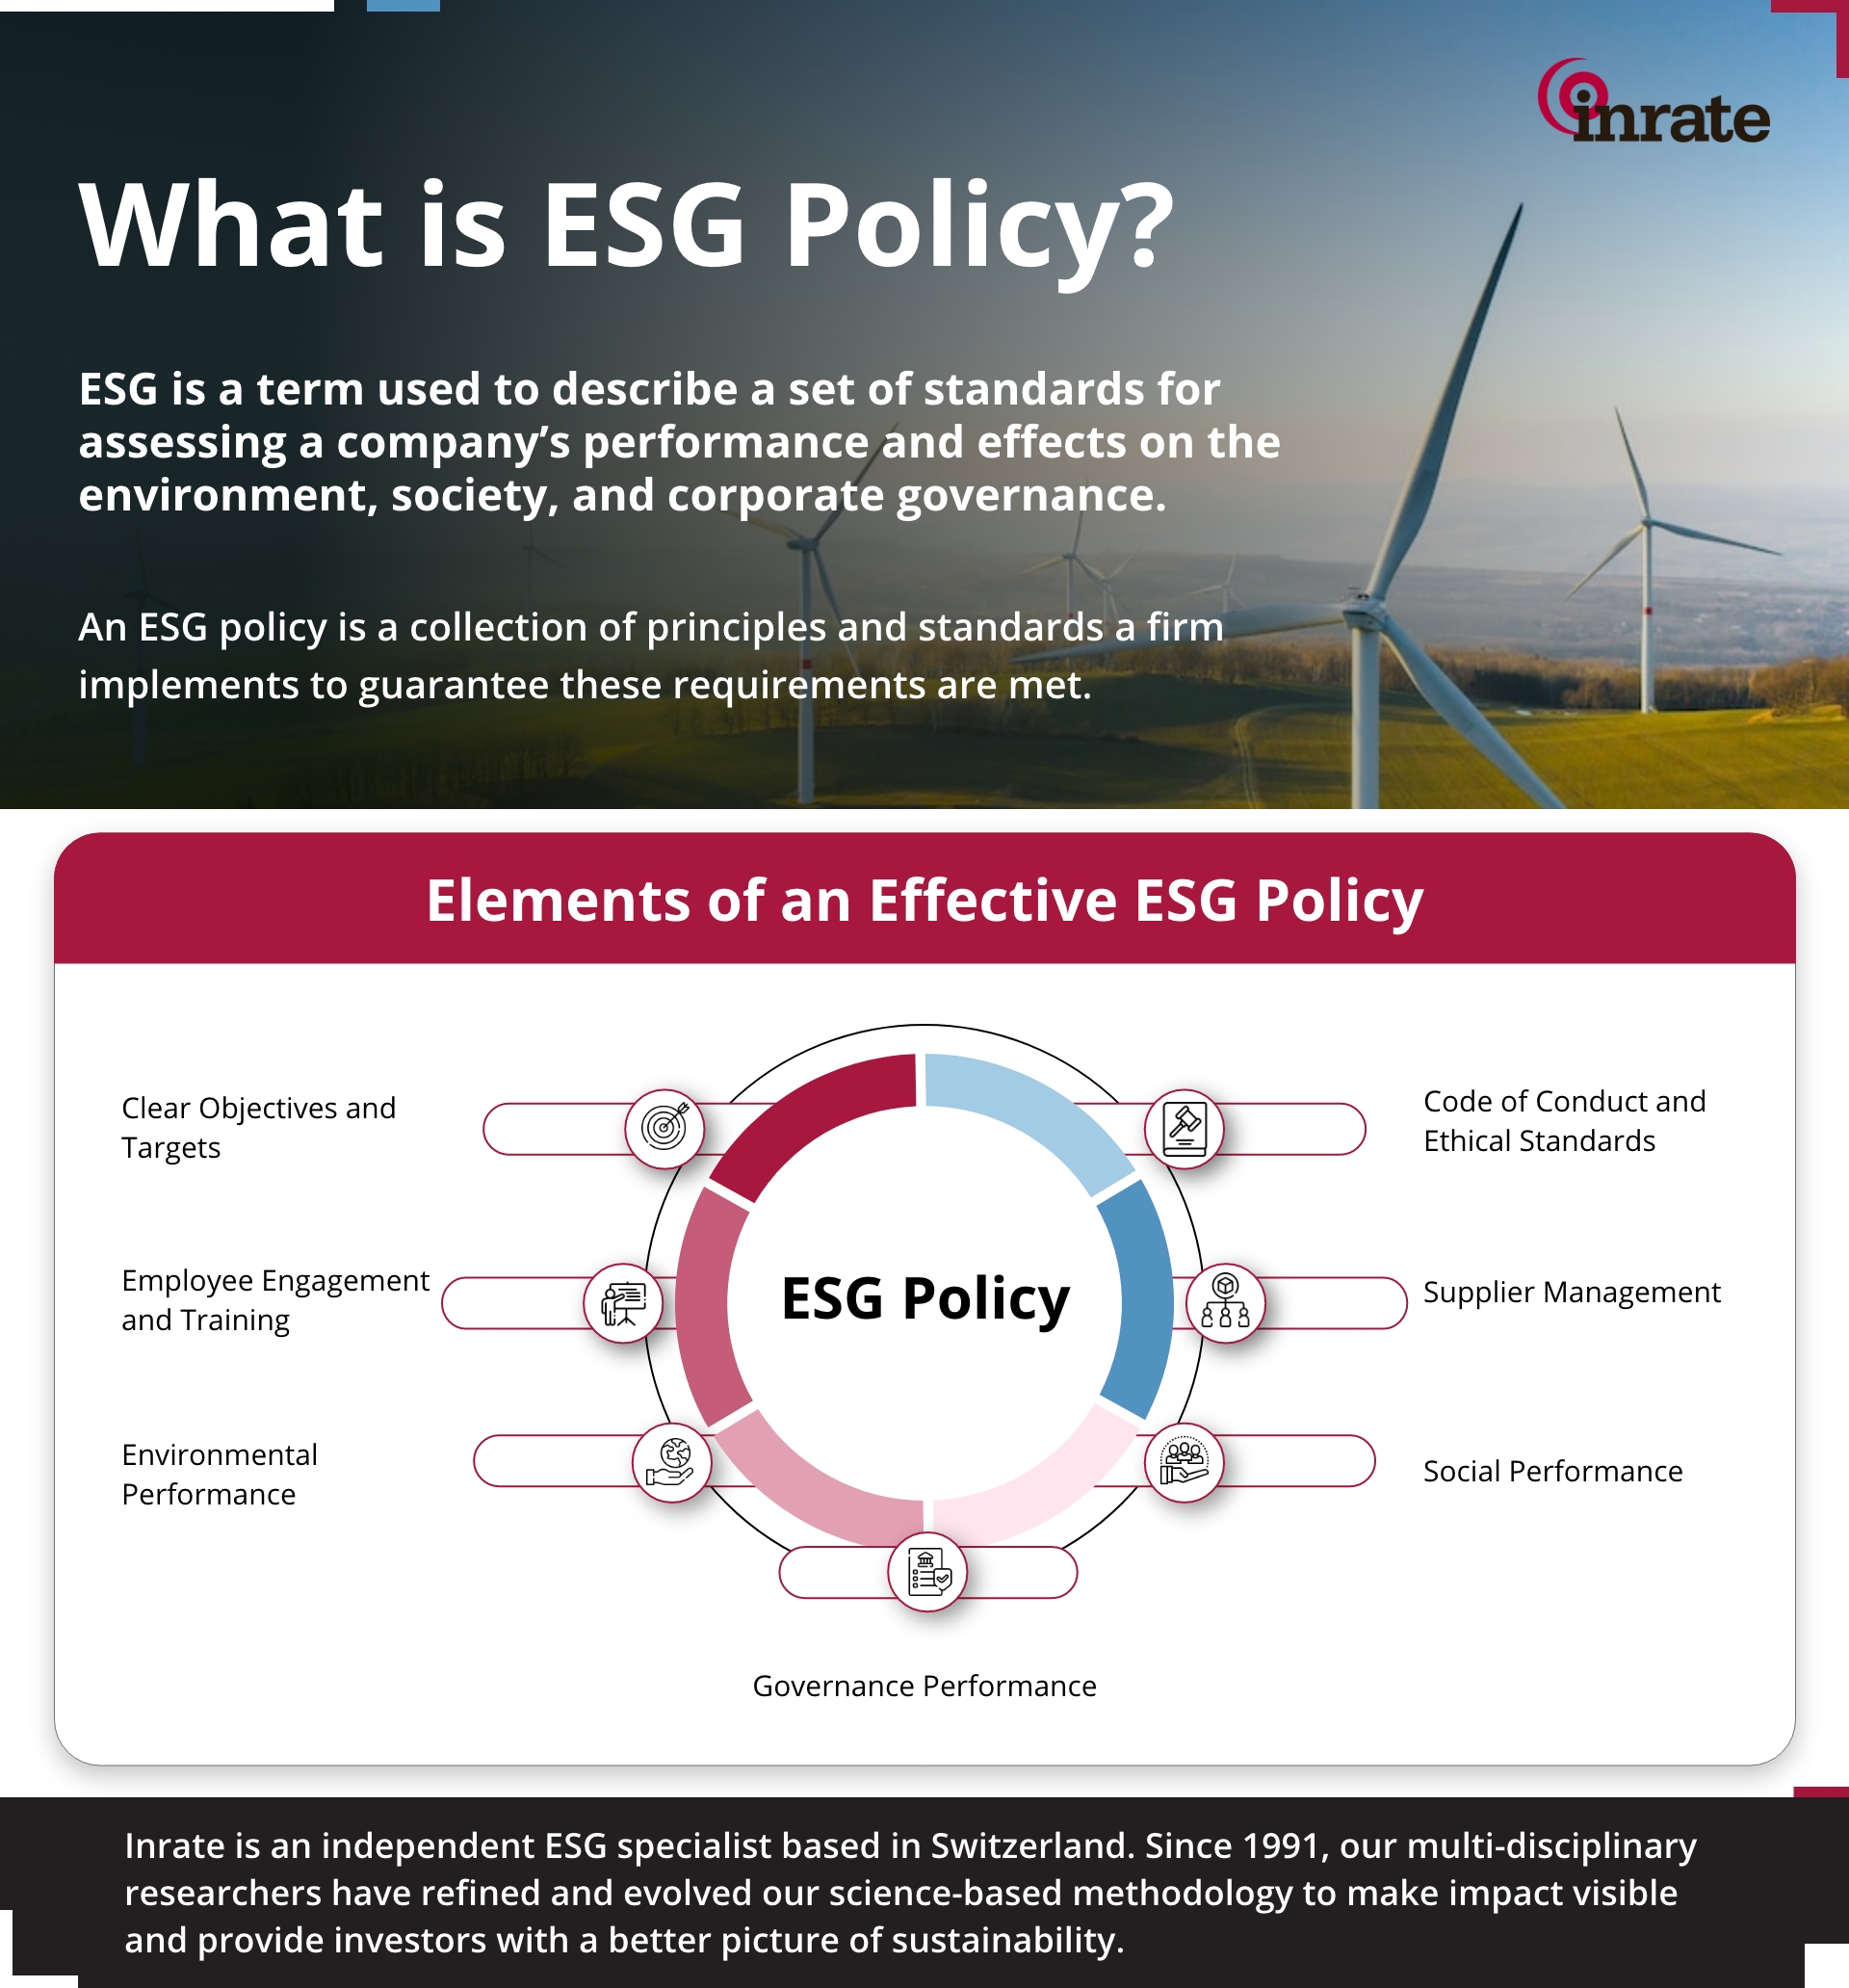 ESG Policies elements and procedures